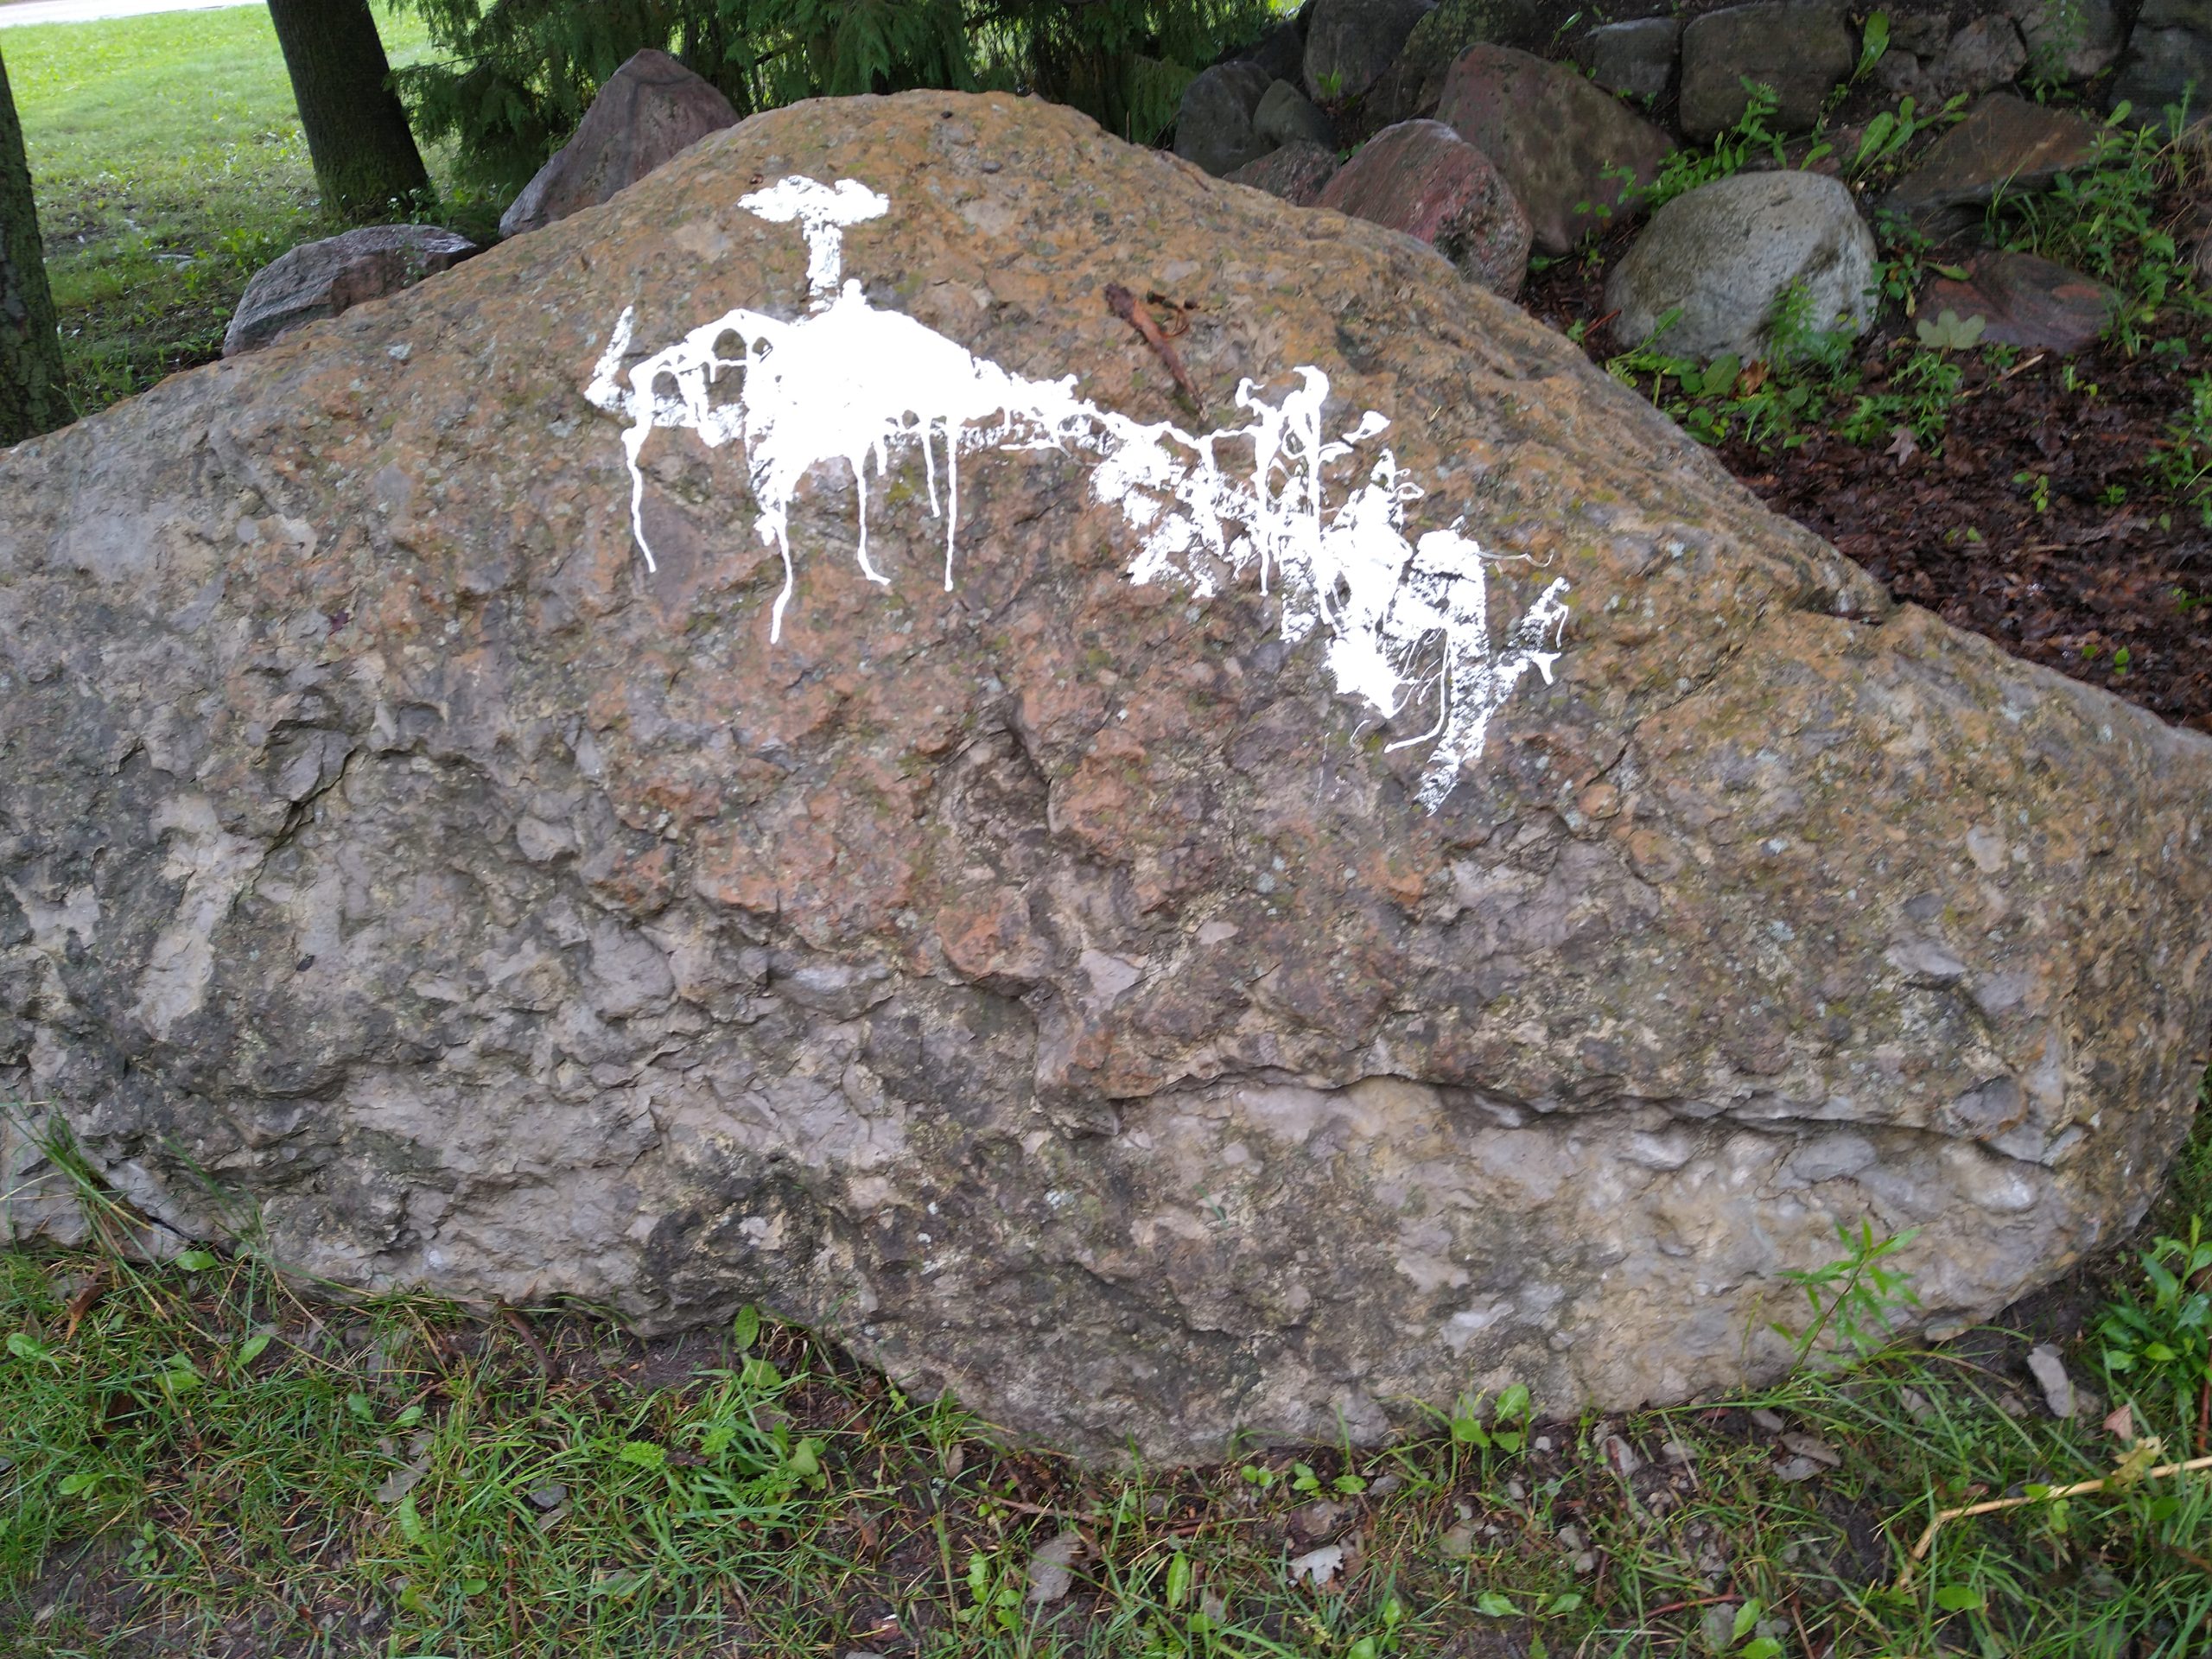 Vandalism at Friendship Park